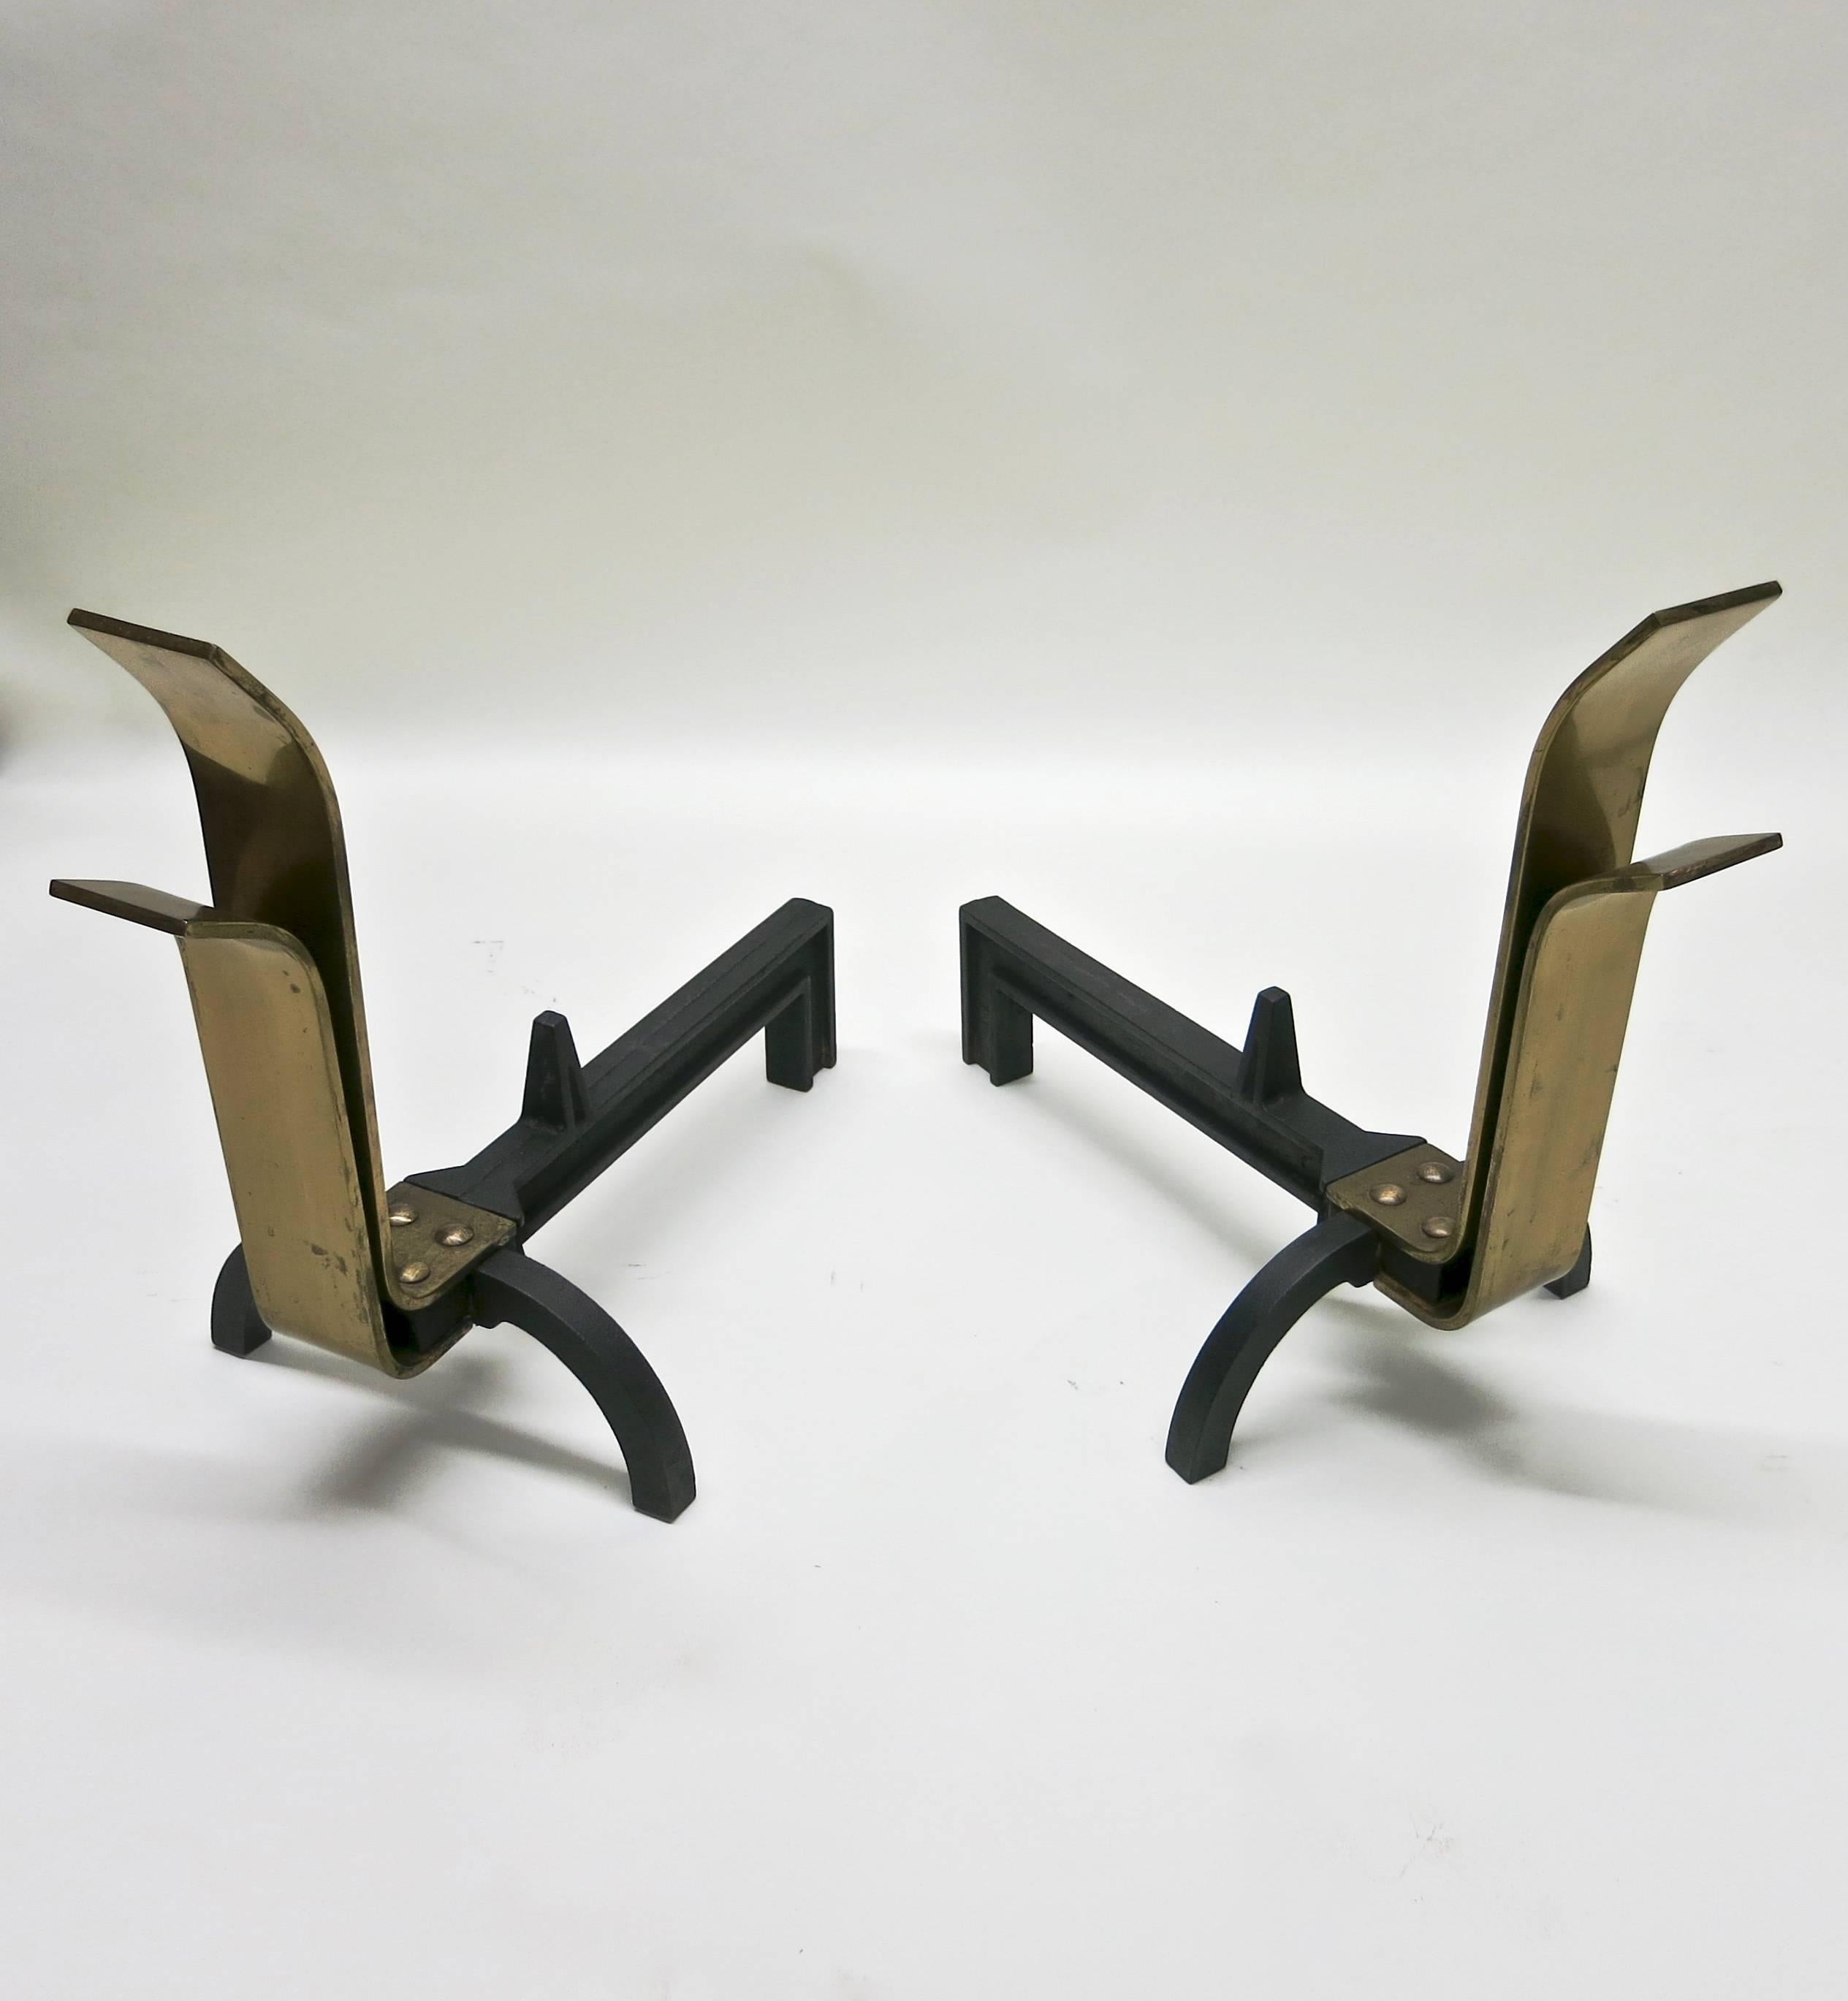 Pair of andirons in chromed brass and wrought iron designed by Eliel Saarinen, J. Robert Swanson and Pipsan Saarinen.